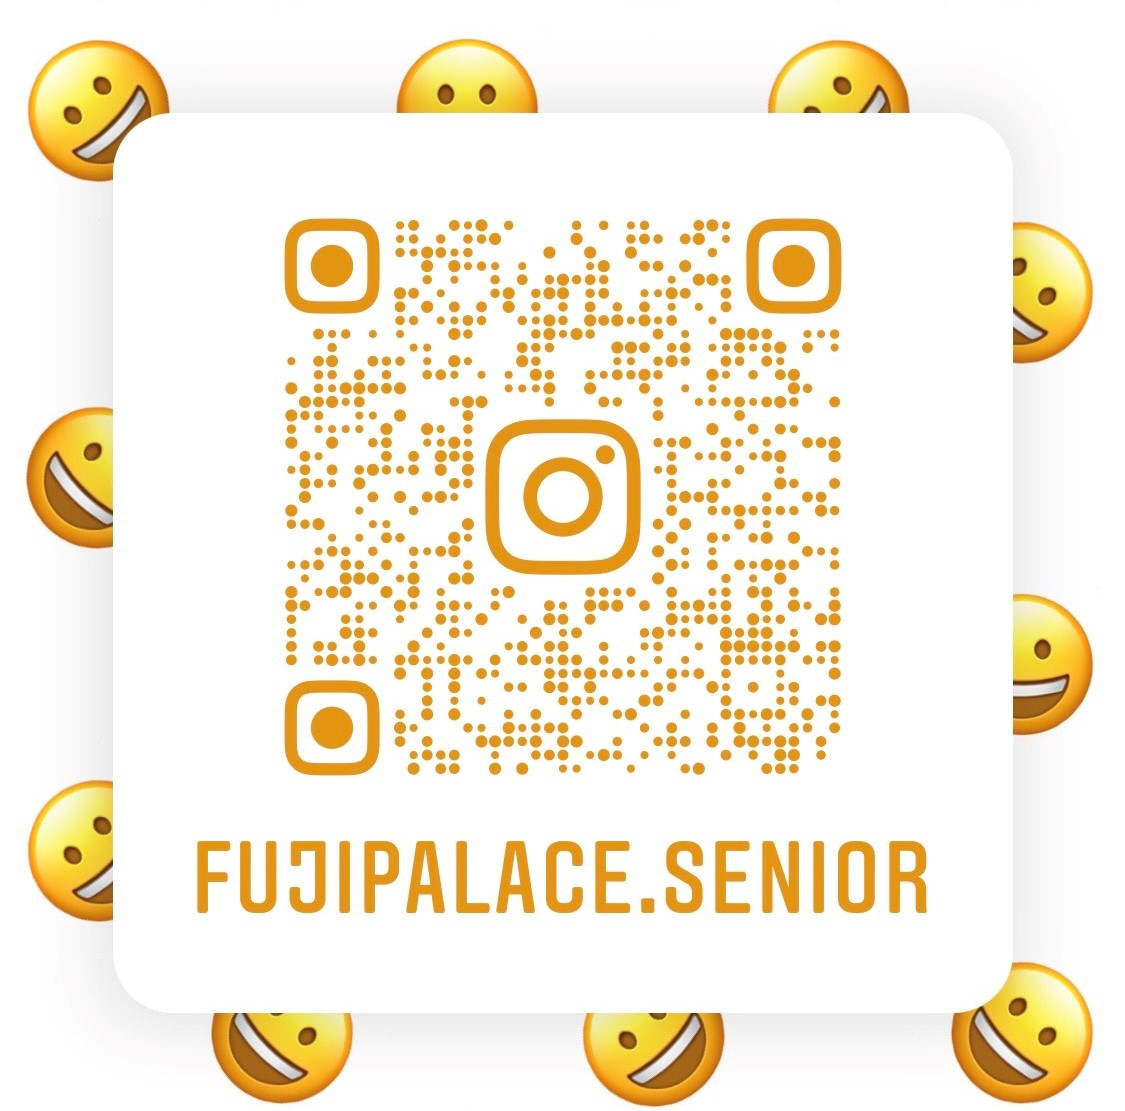 https://www.instagram.com/fujipalace.senior/